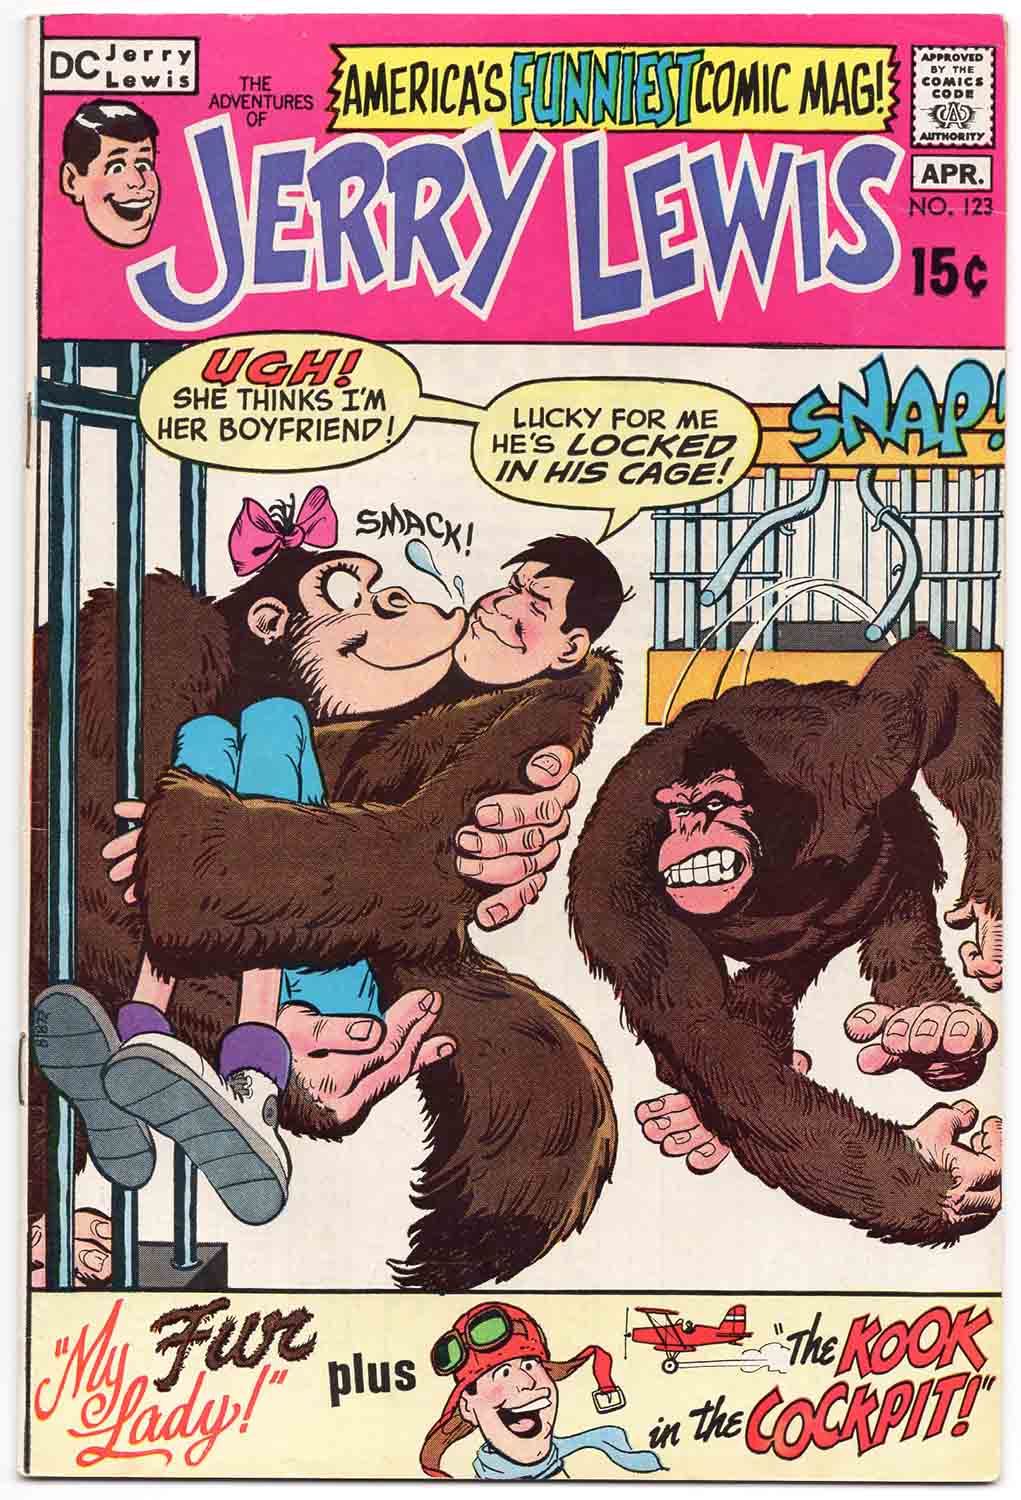 Adventures of Jerry Lewis #123